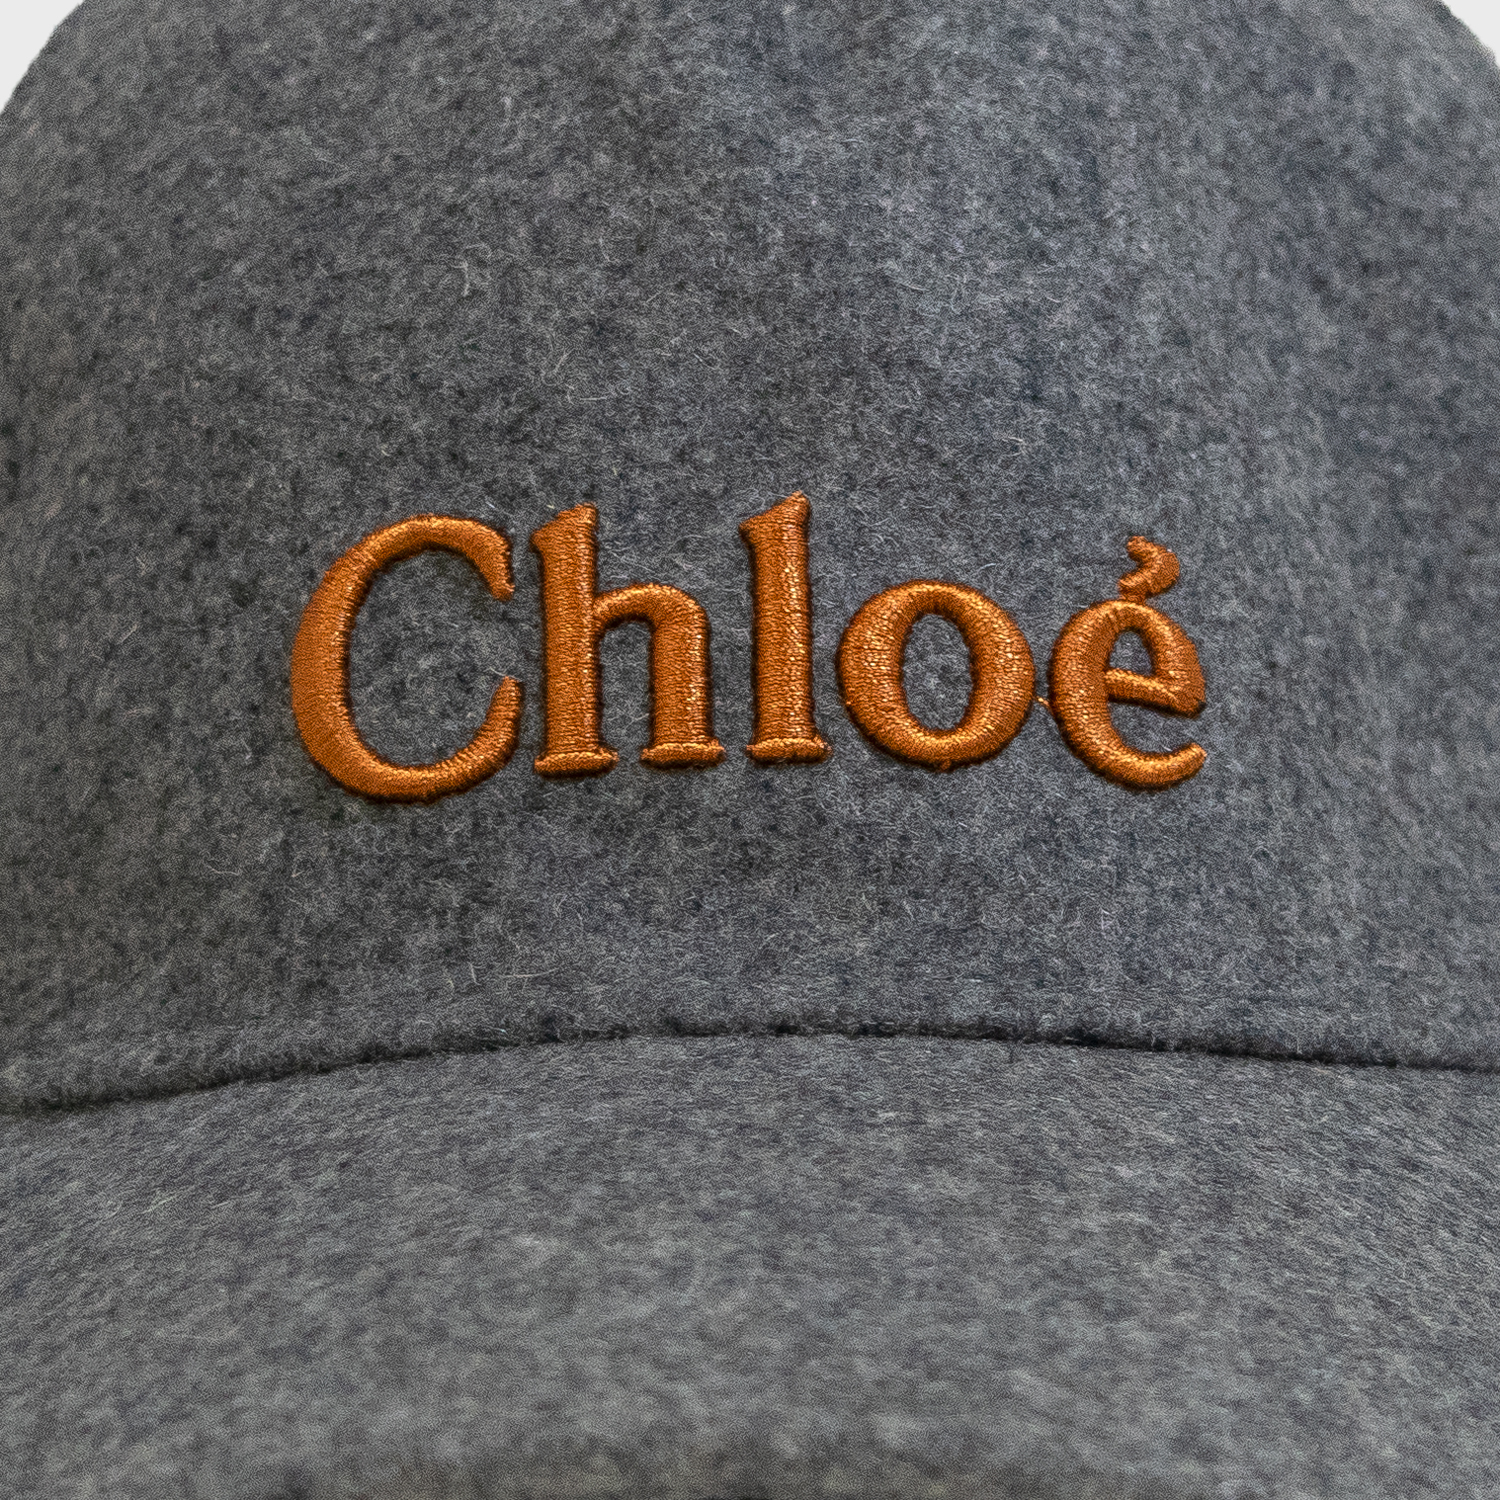 Chloe クロエ ロゴ キャップ 帽子 クロエキッズ 大人もOK (505791626